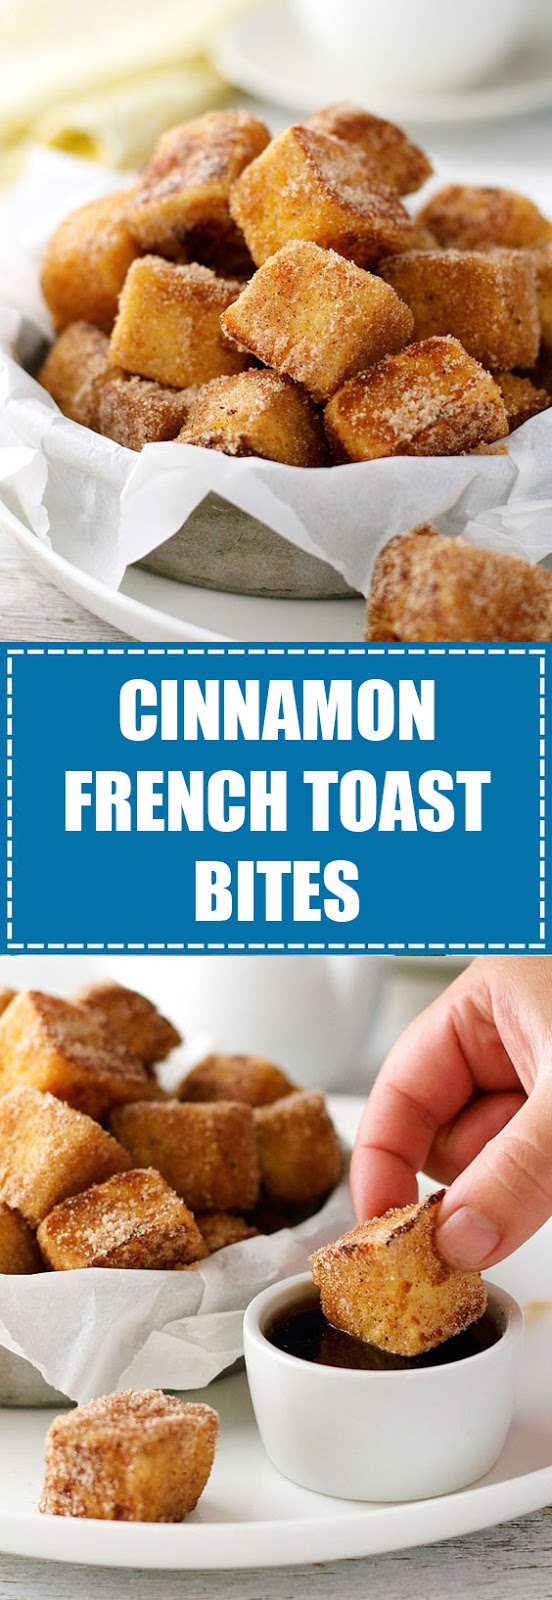 Cinnamon French Toast Bites